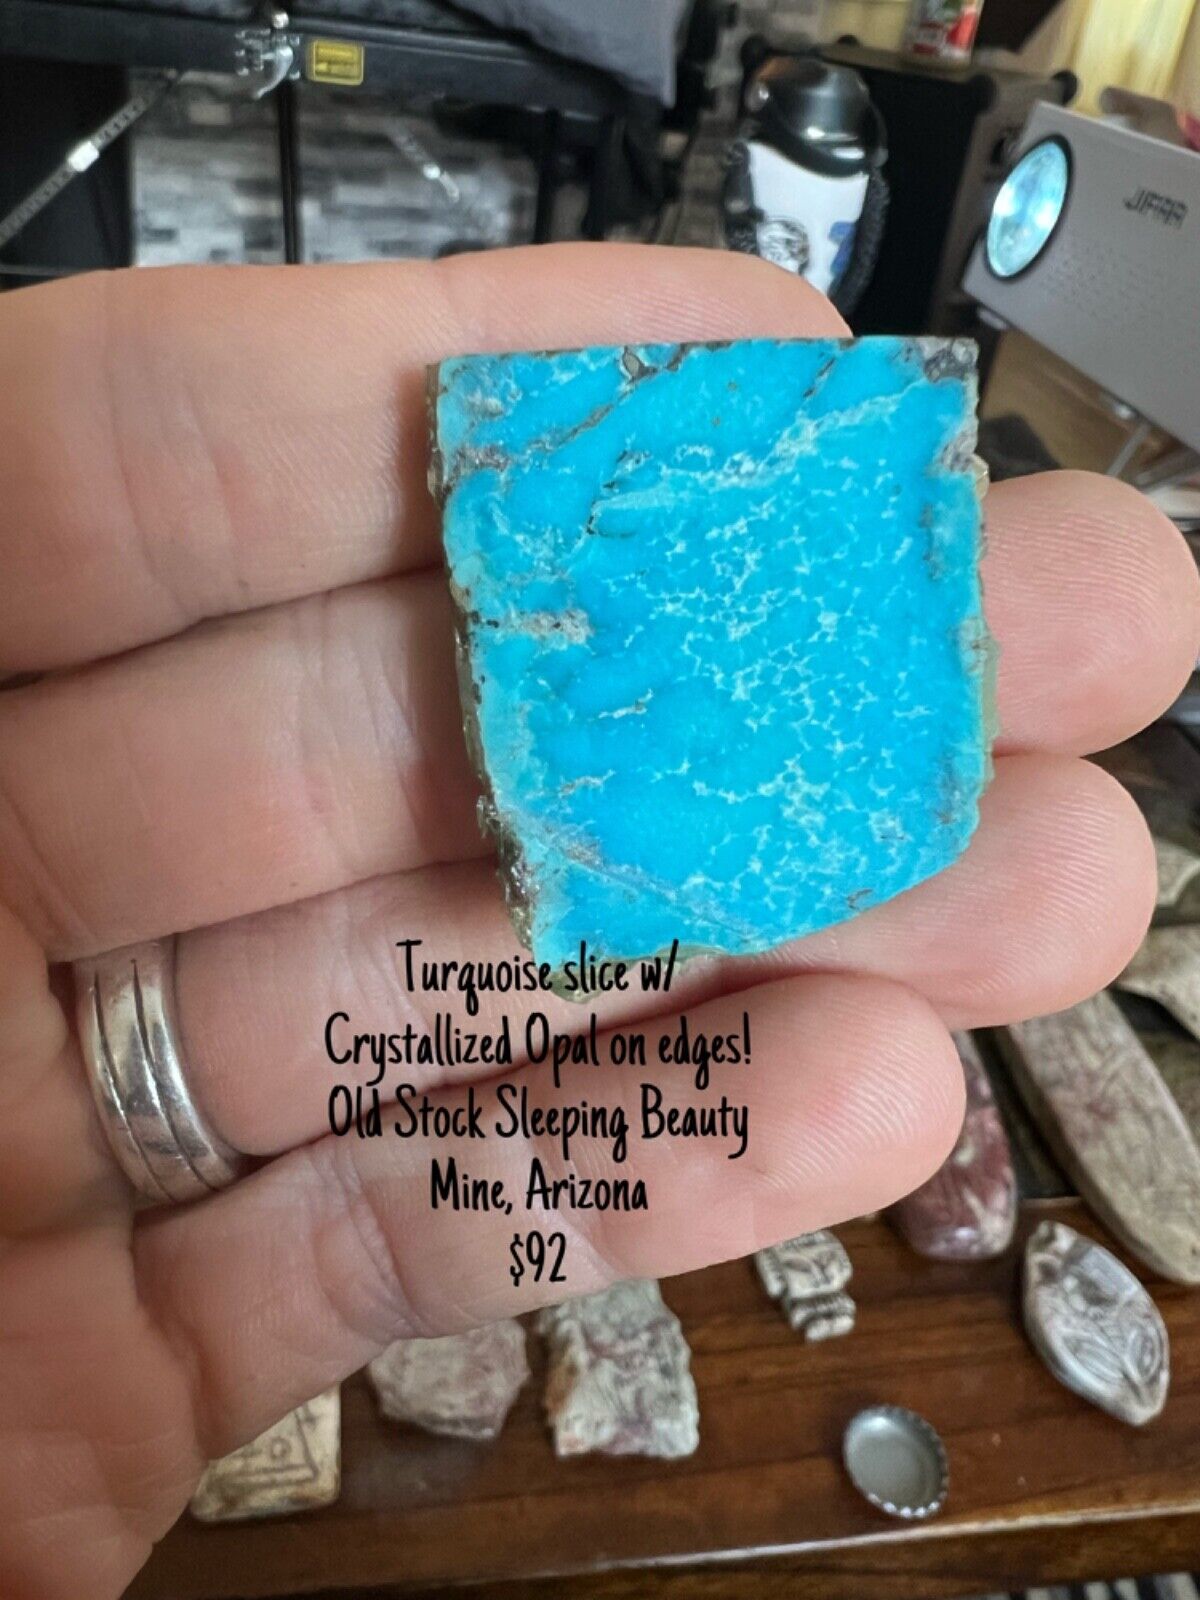 Turquoise Slice with Crystallized Opal from Sleeping Beauty Mine Arizona